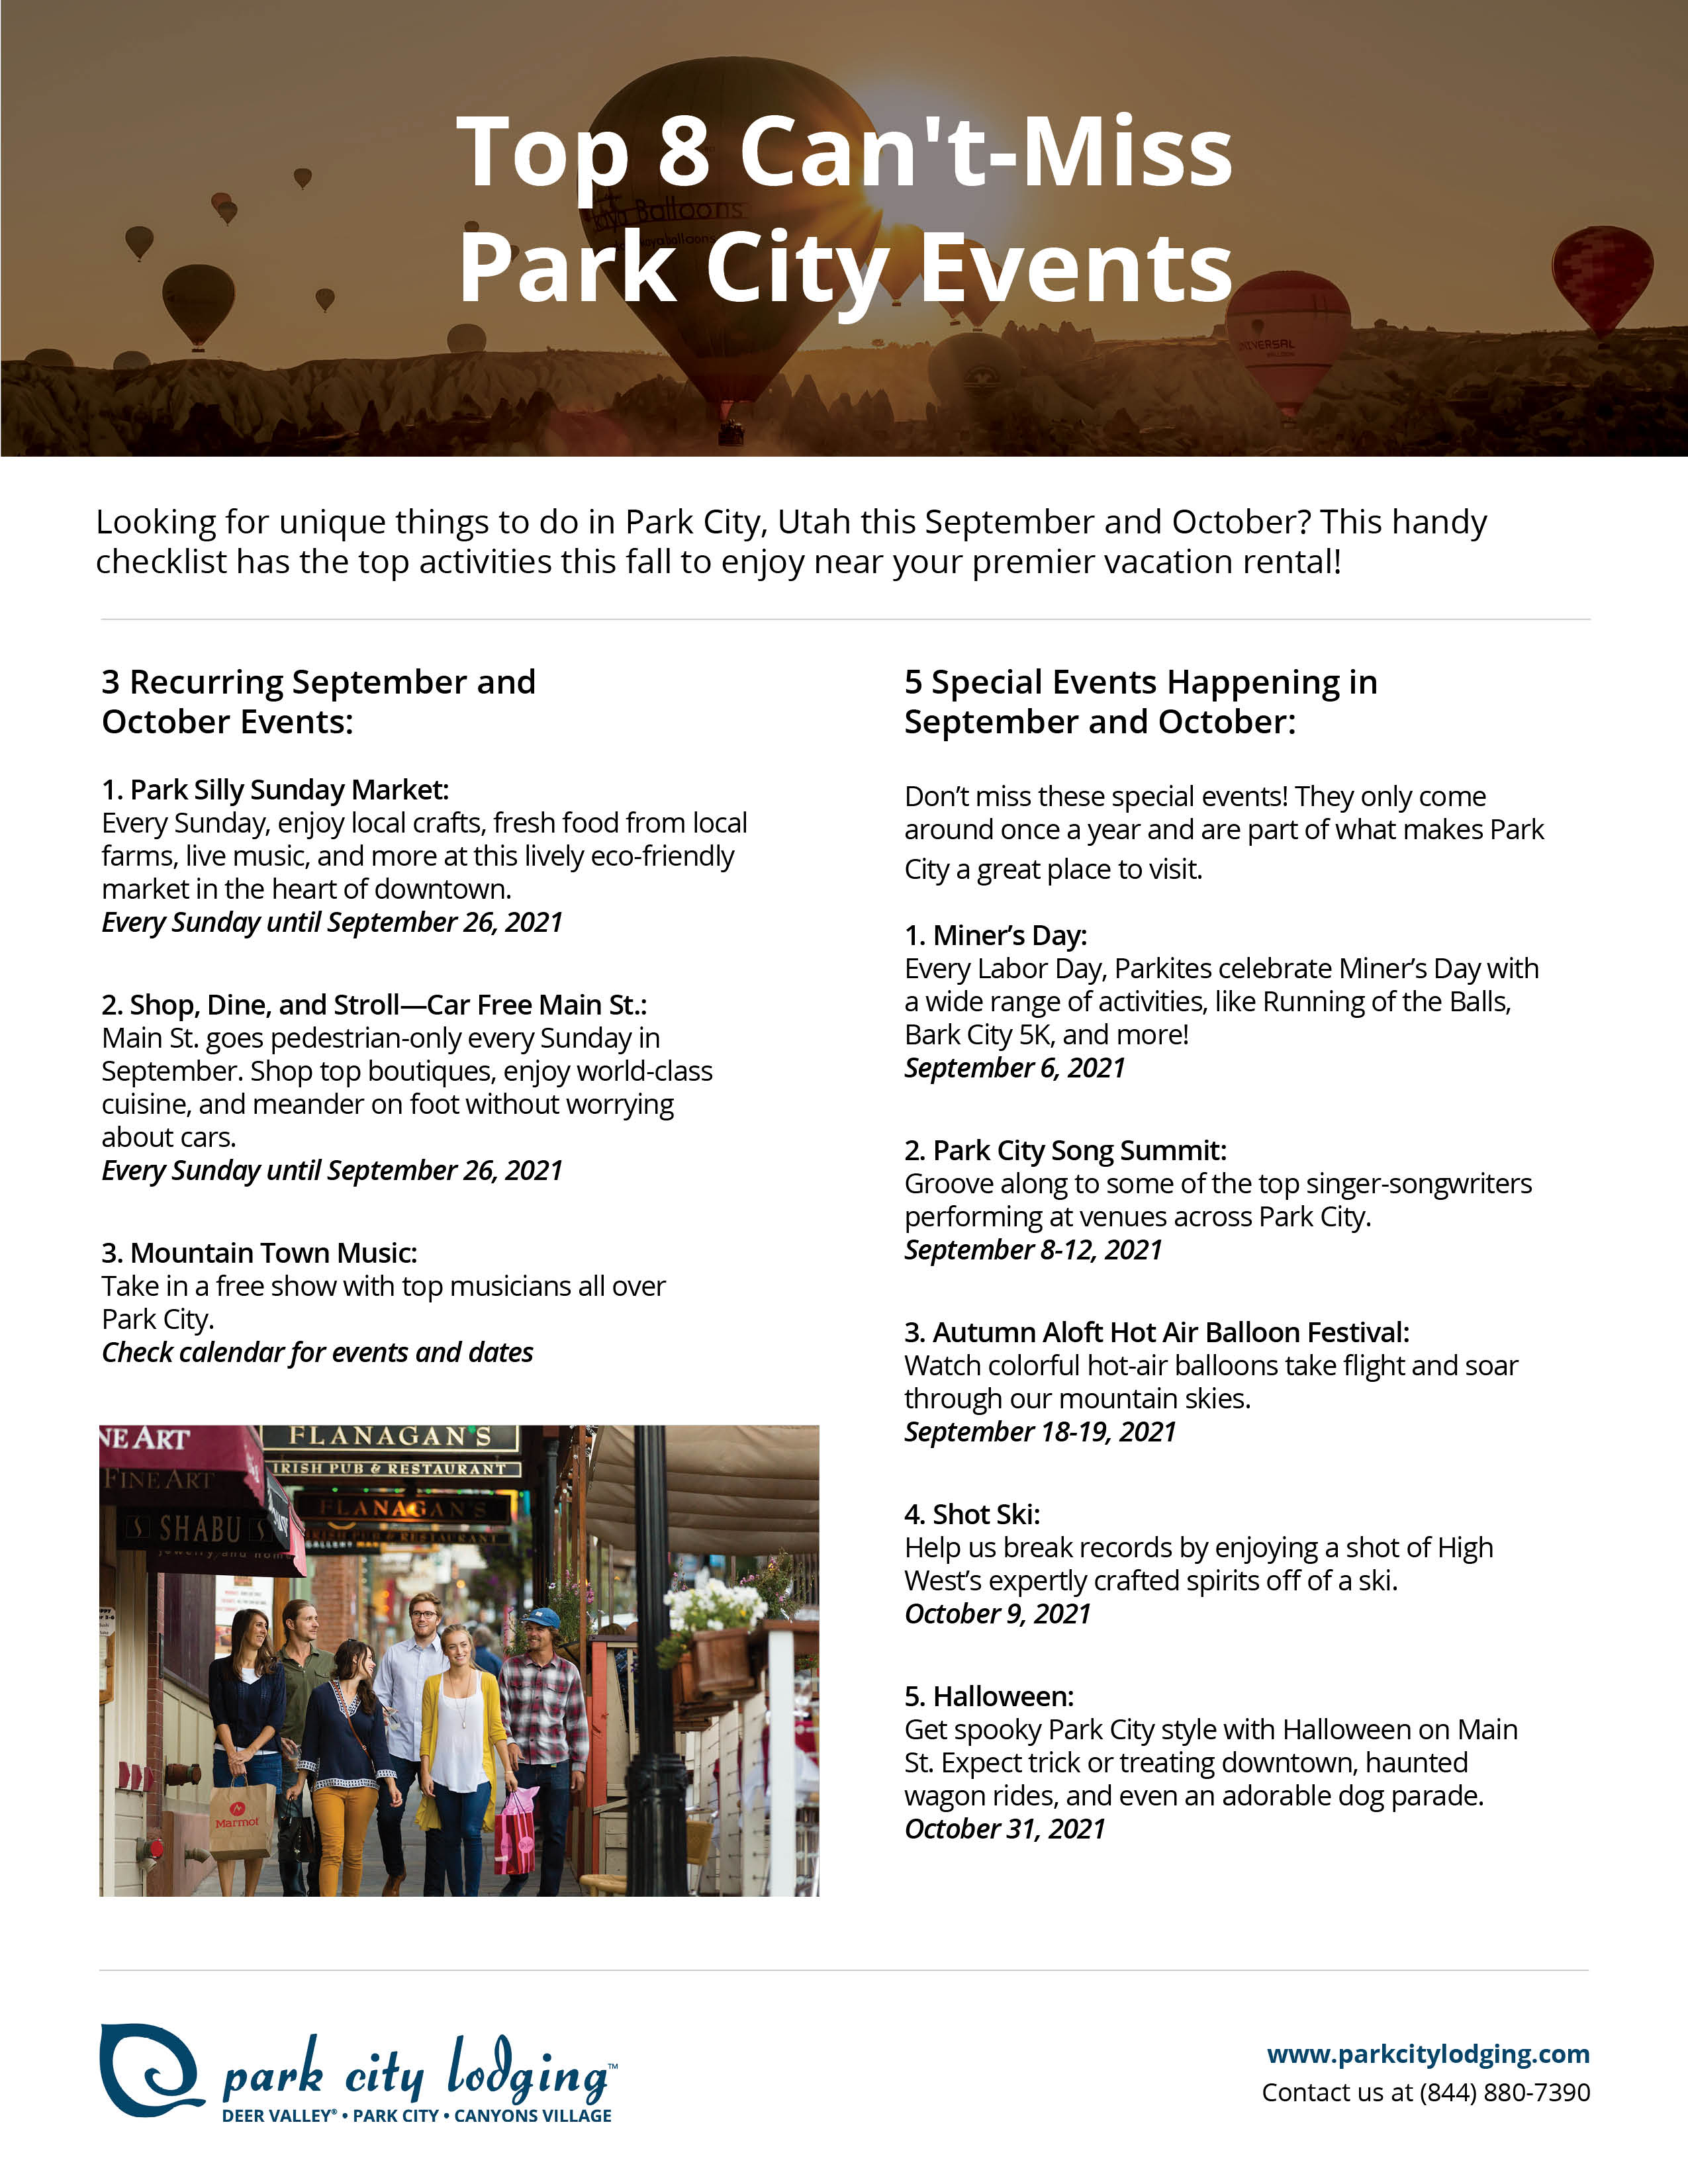 Best Park City events checklist